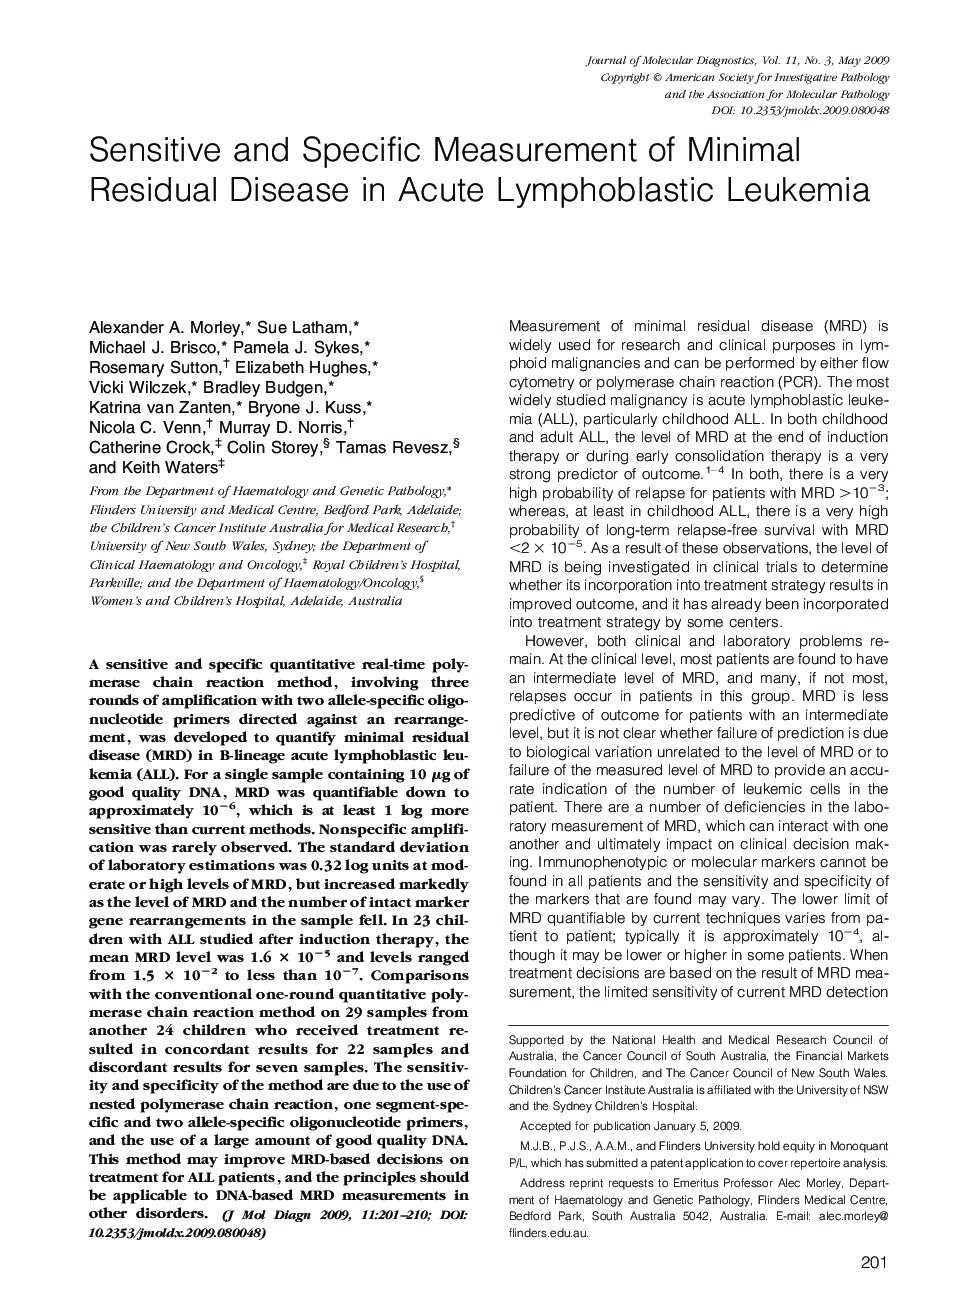 Sensitive and Specific Measurement of Minimal Residual Disease in Acute Lymphoblastic Leukemia 